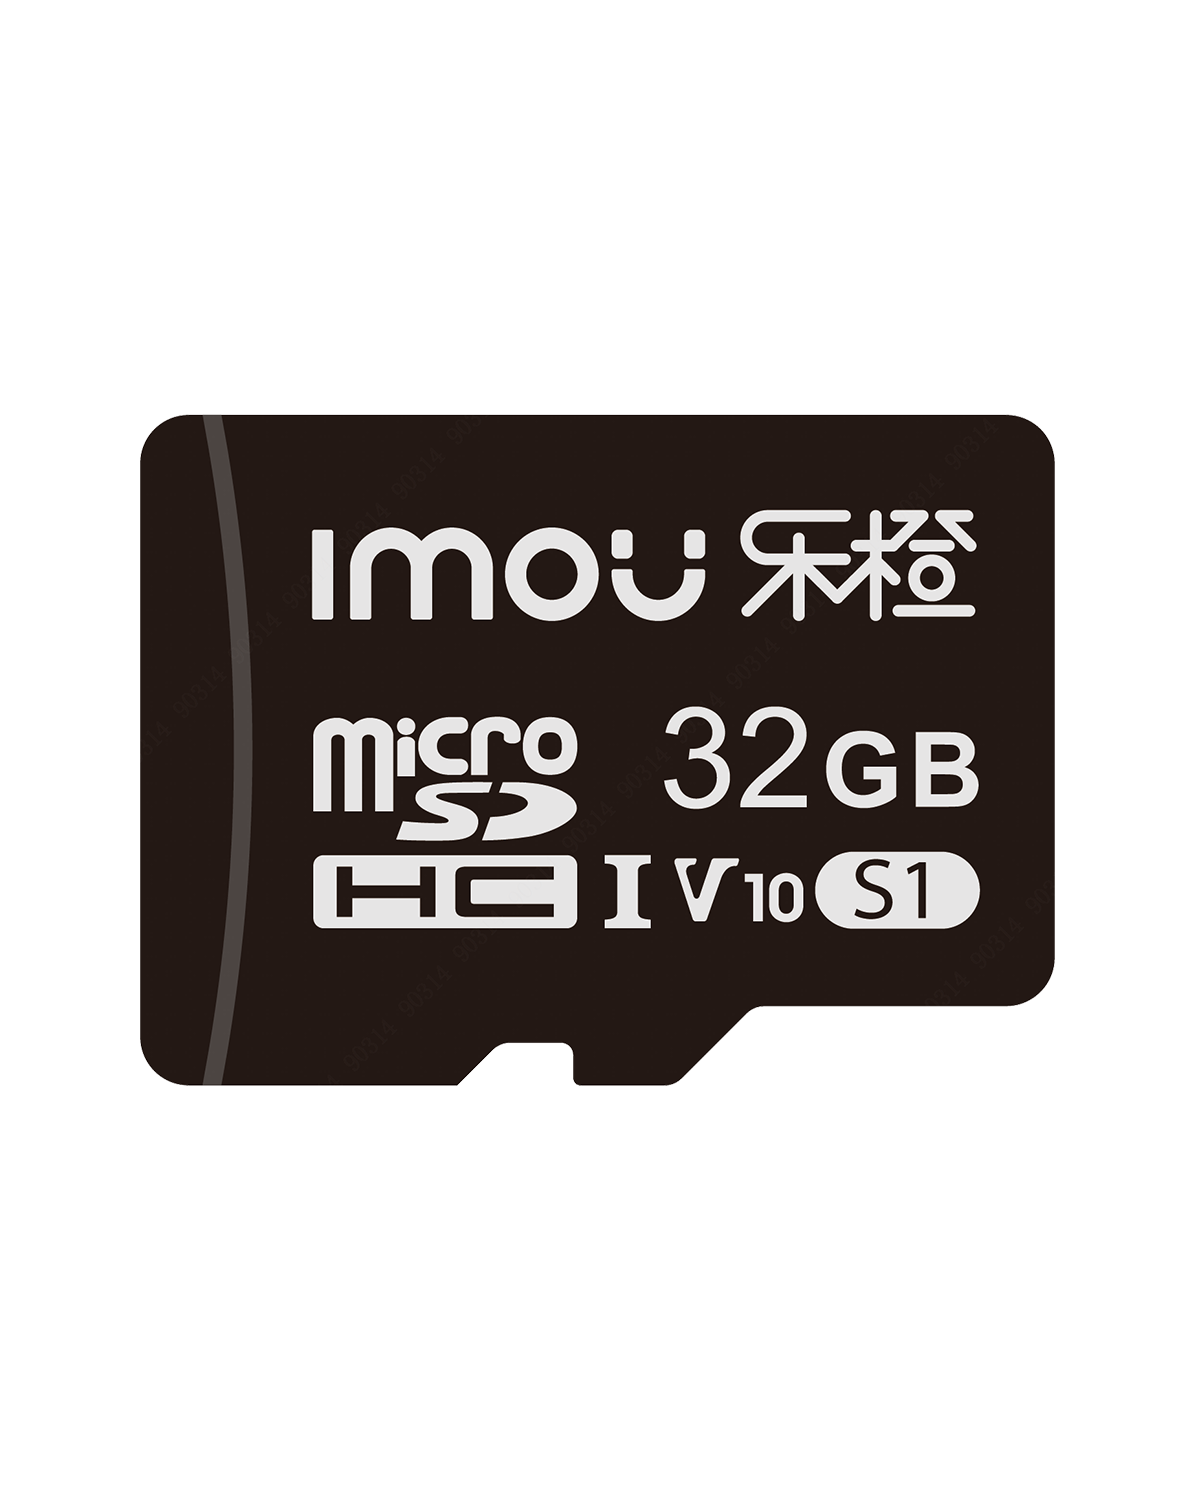 _Gift_ 32GB Micro SD Memory Card